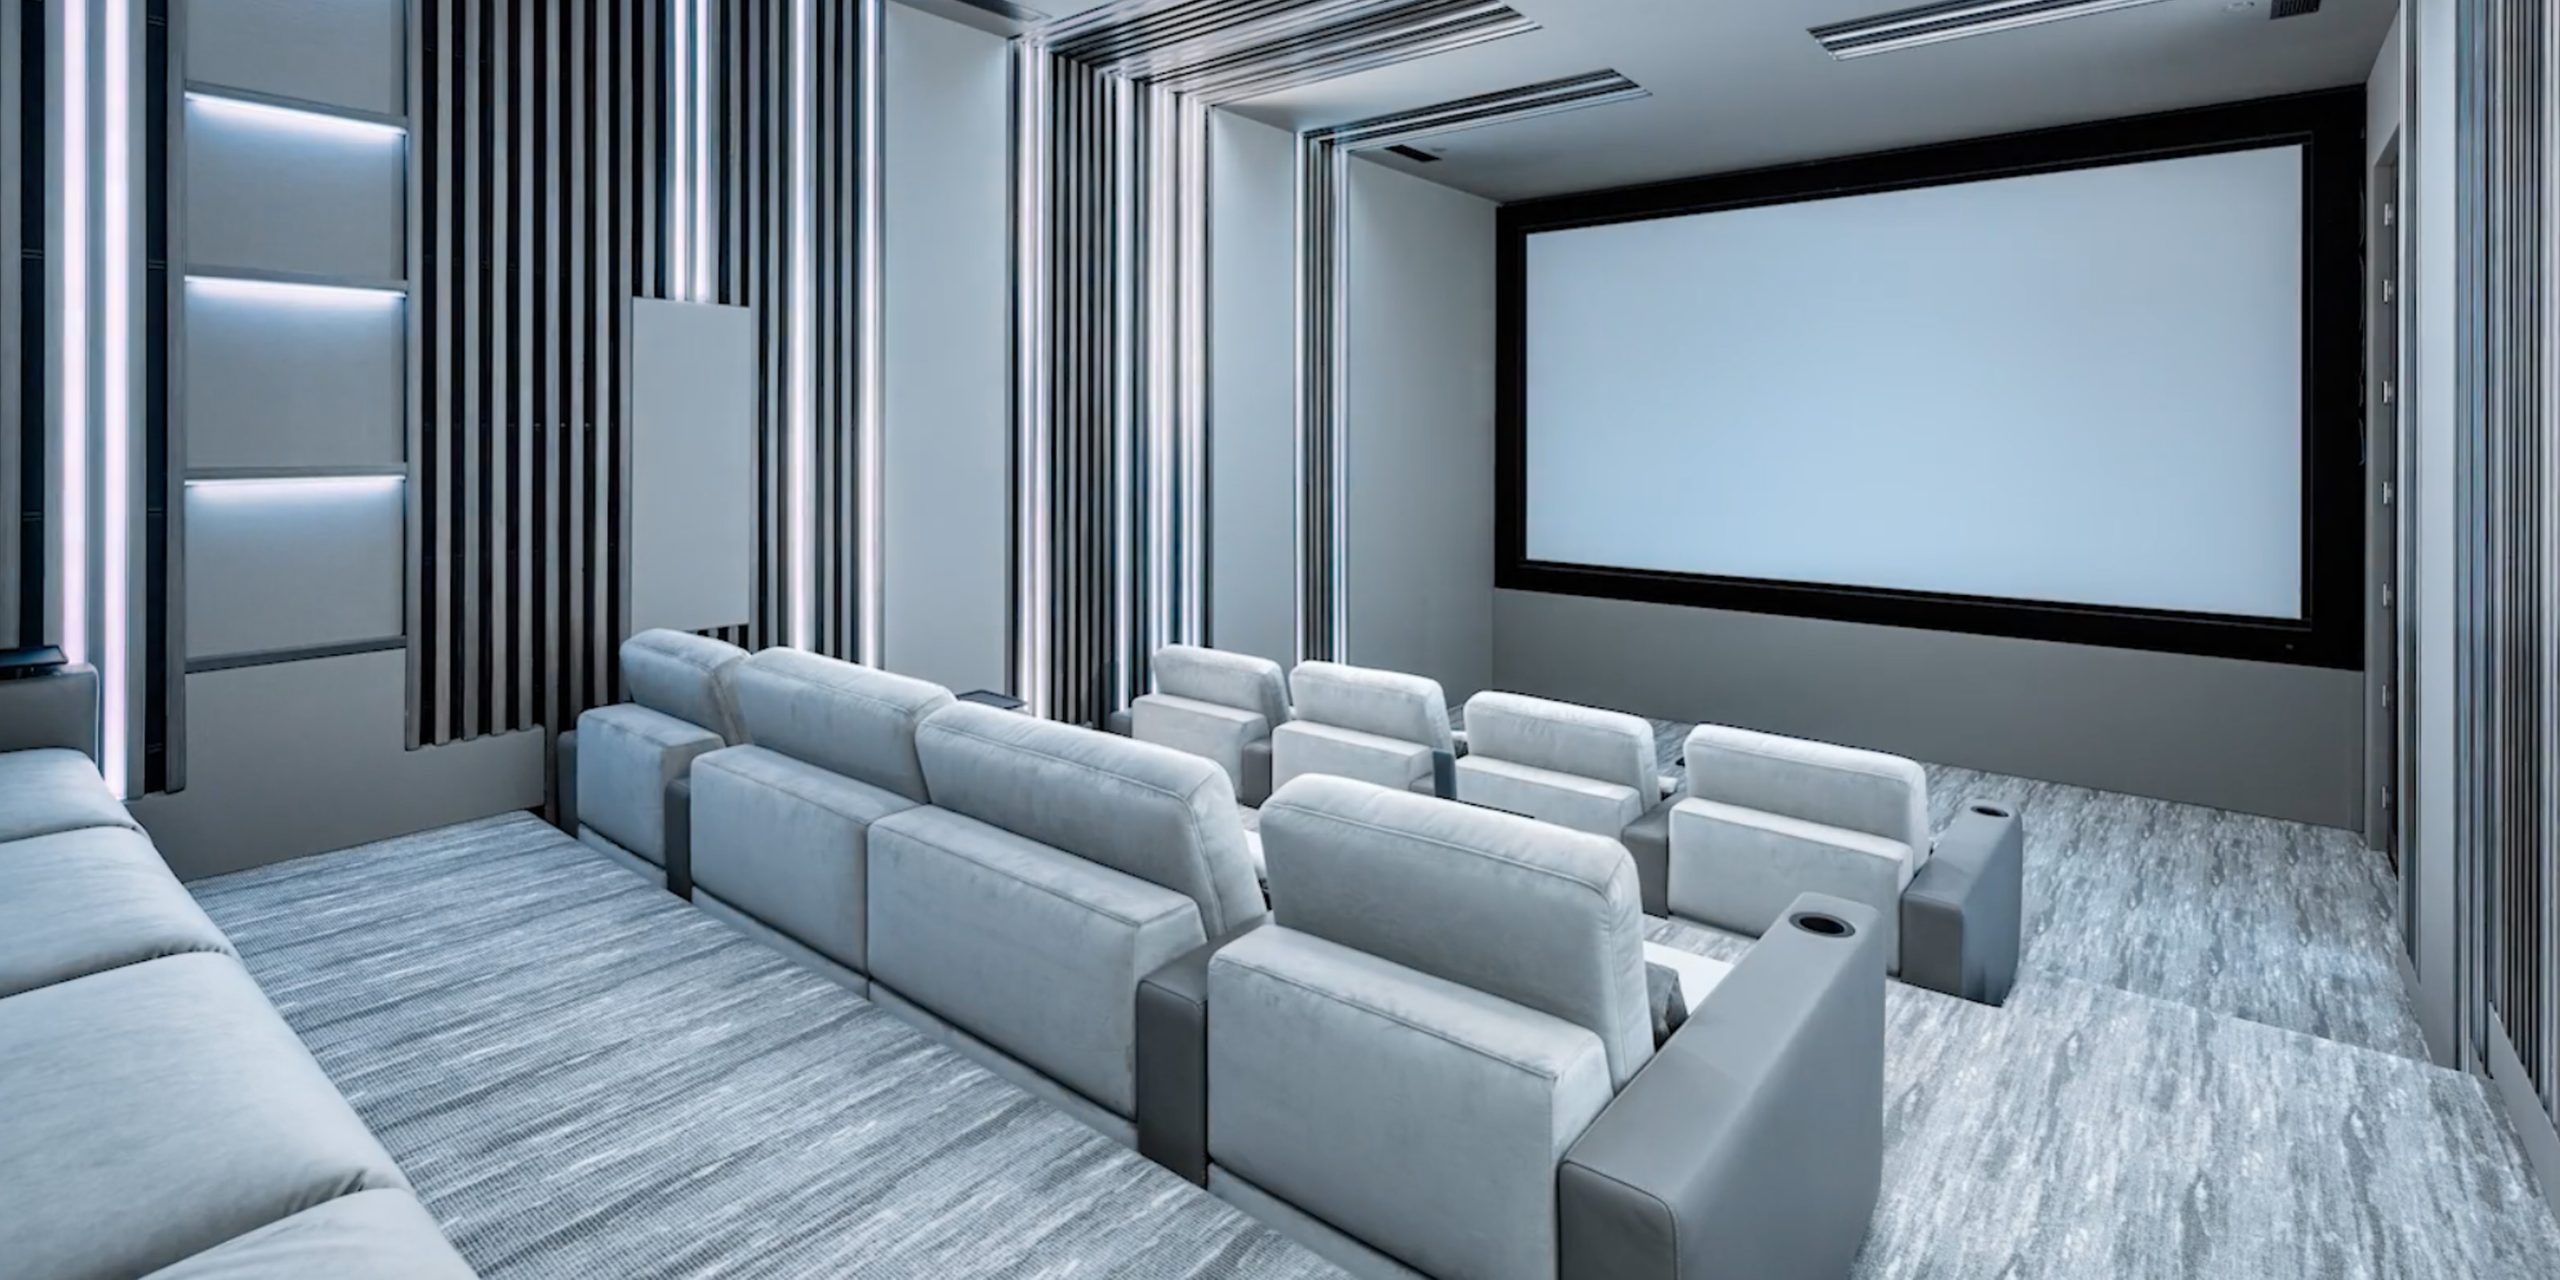 Modern home cinema with Largo seating luxury, LED lighting